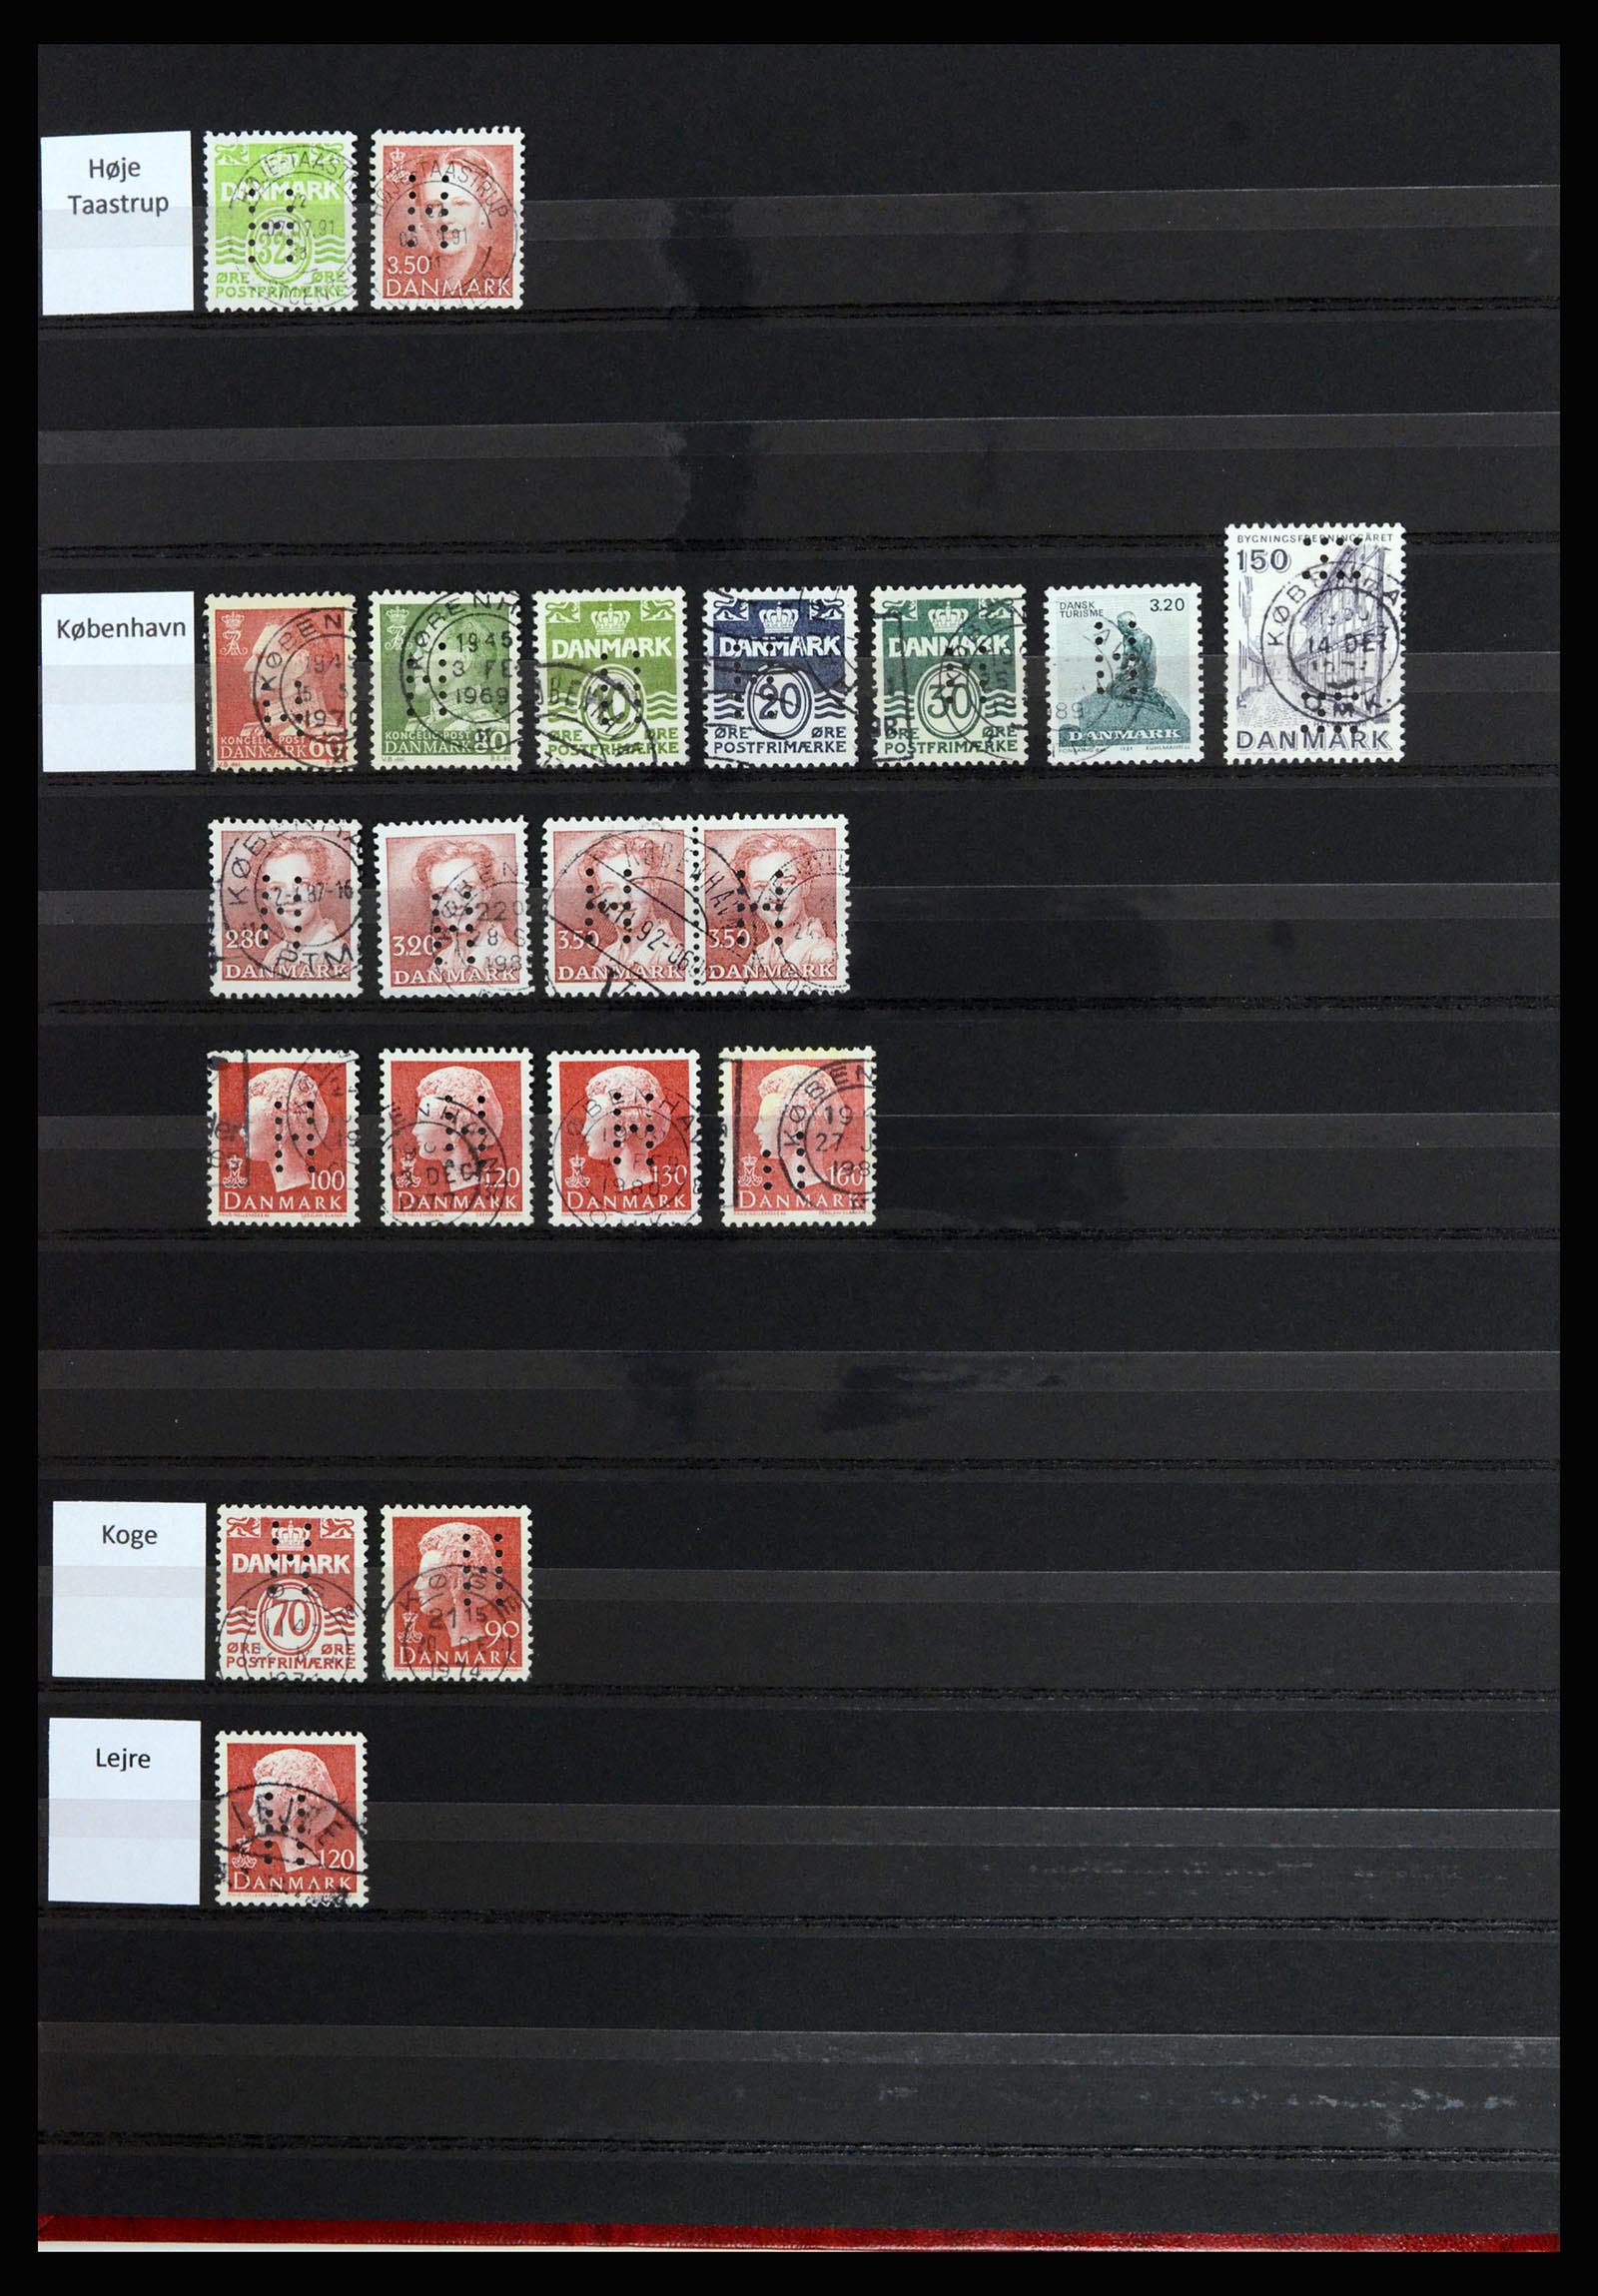 37056 016 - Stamp collection 37056 Denmark perfins.